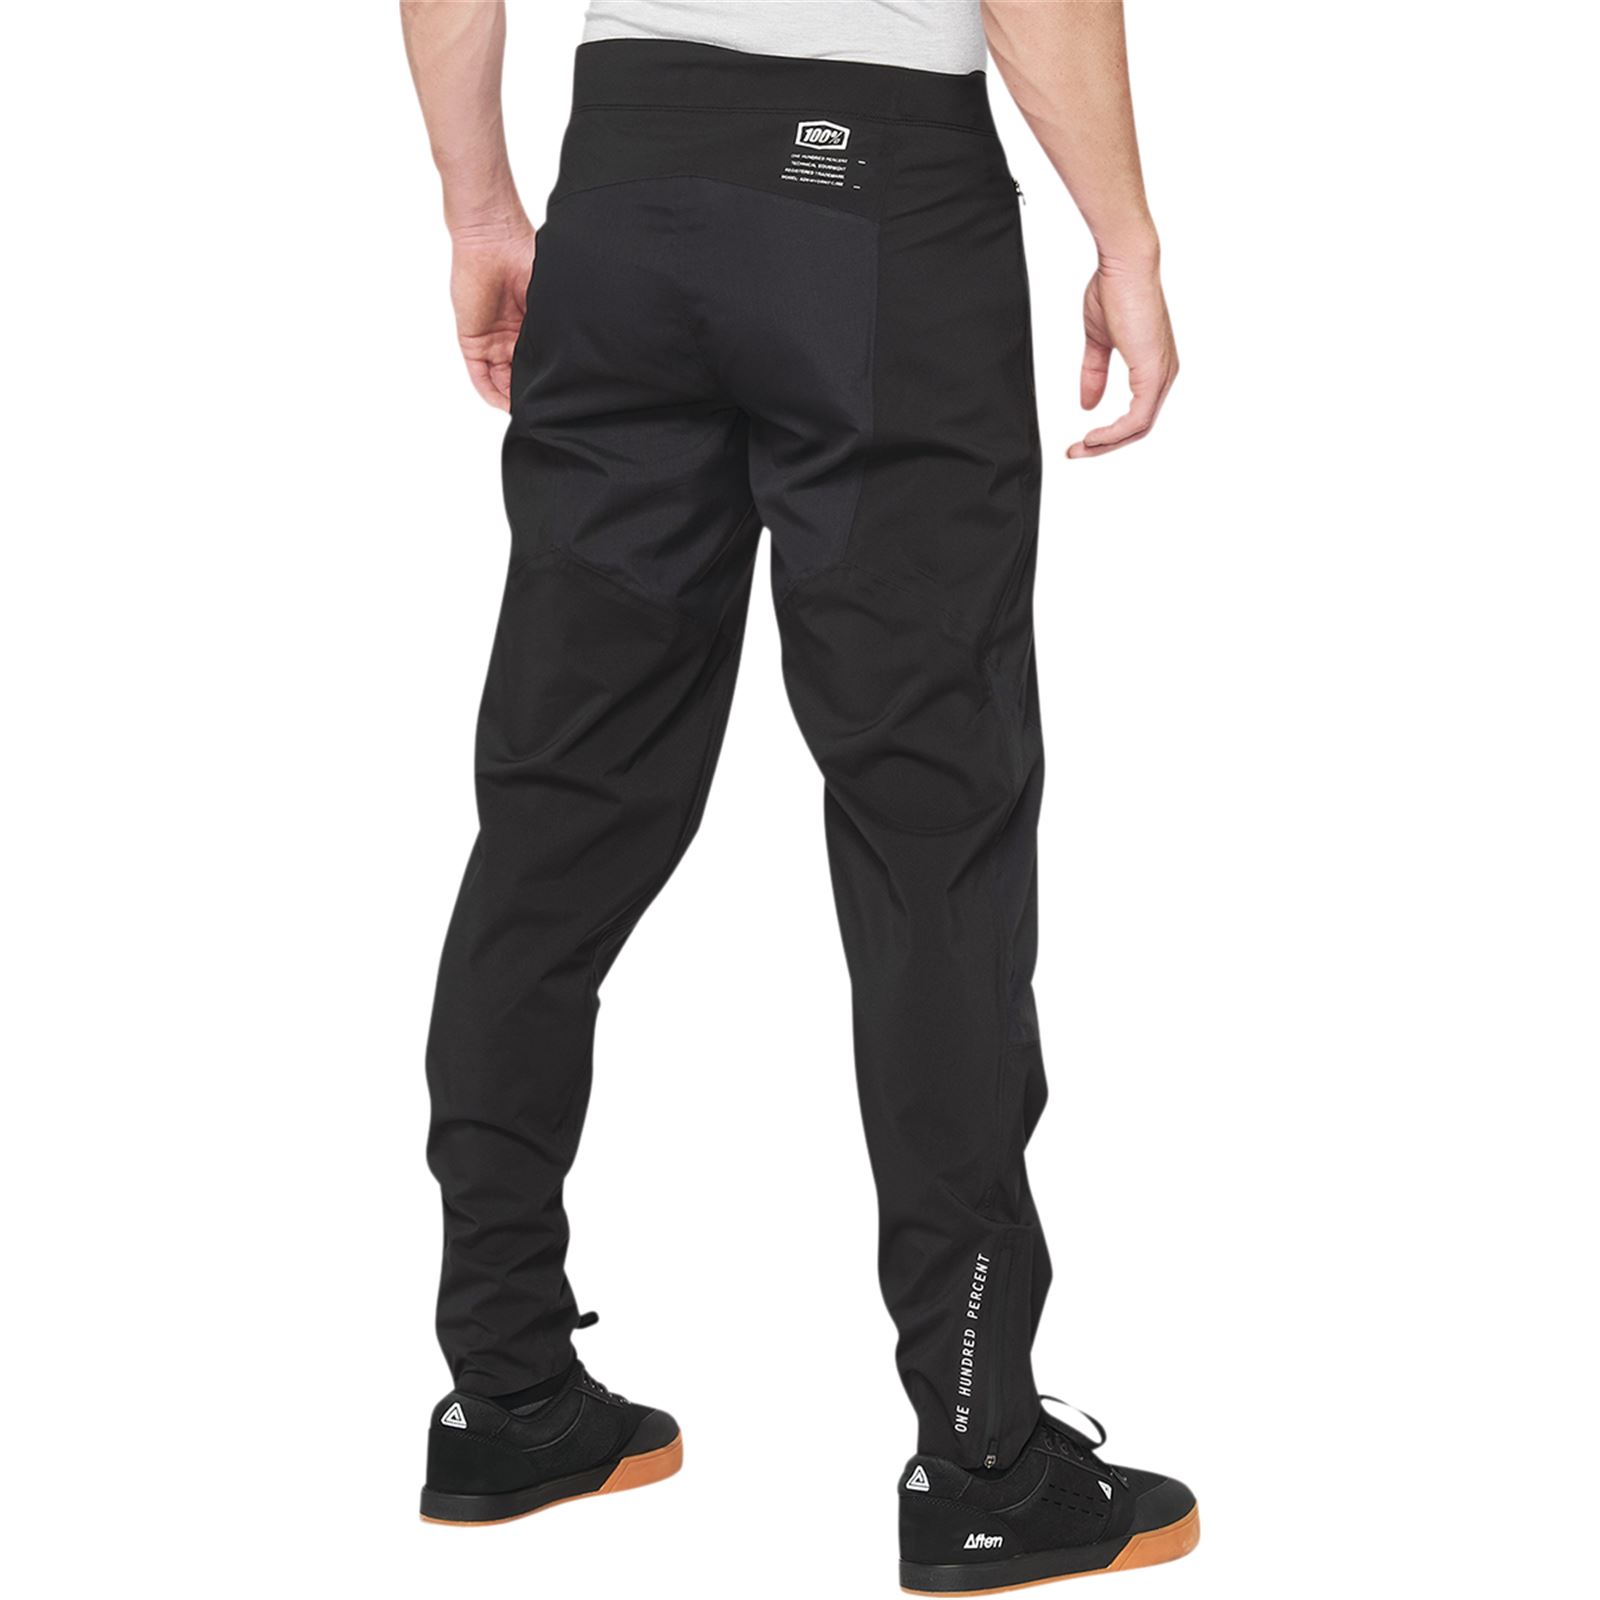 100% Hydromatic Pants - Black - US 32